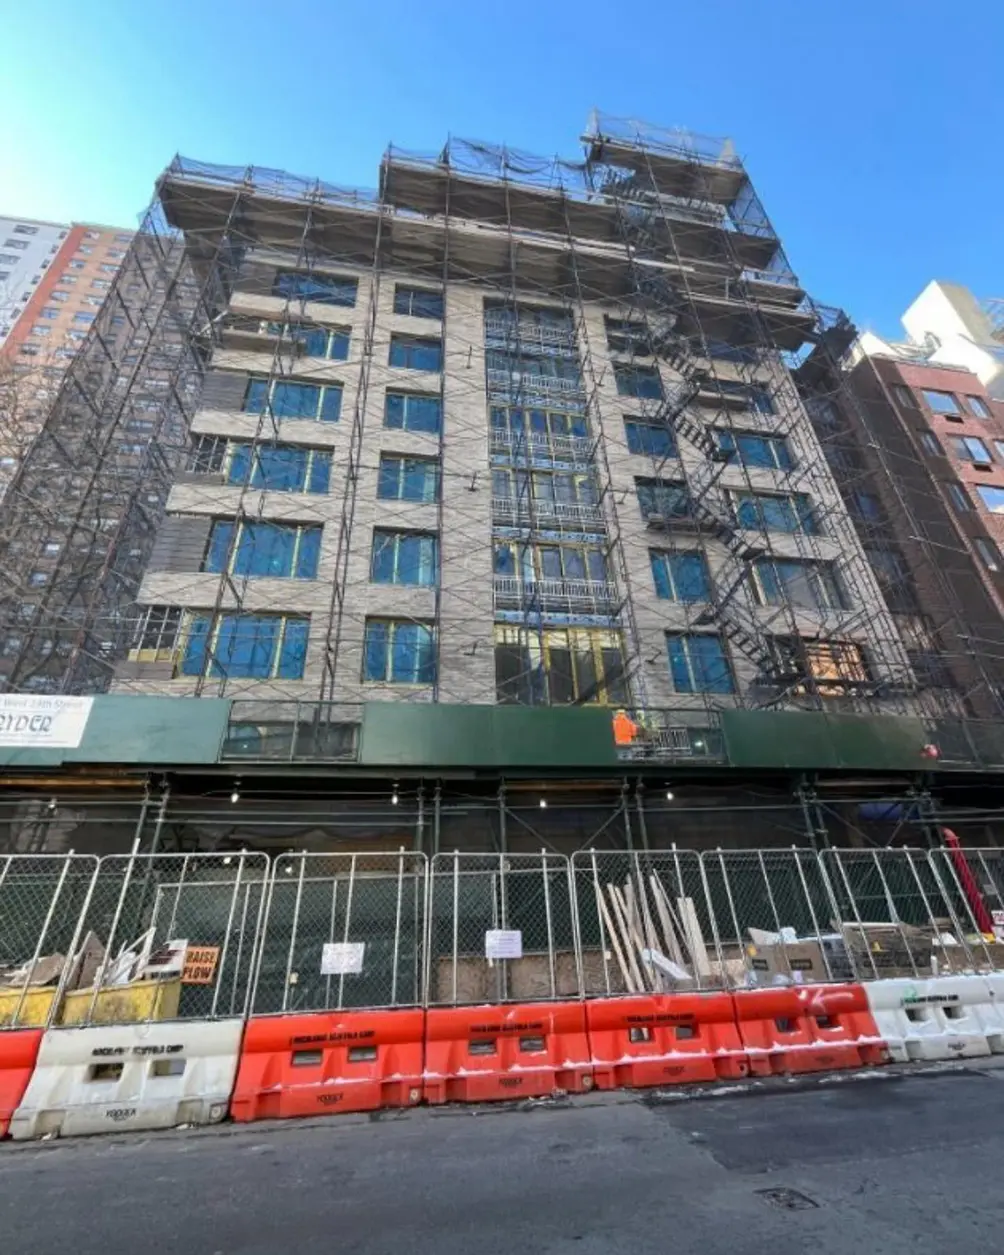 428 West 19th Street construction progress